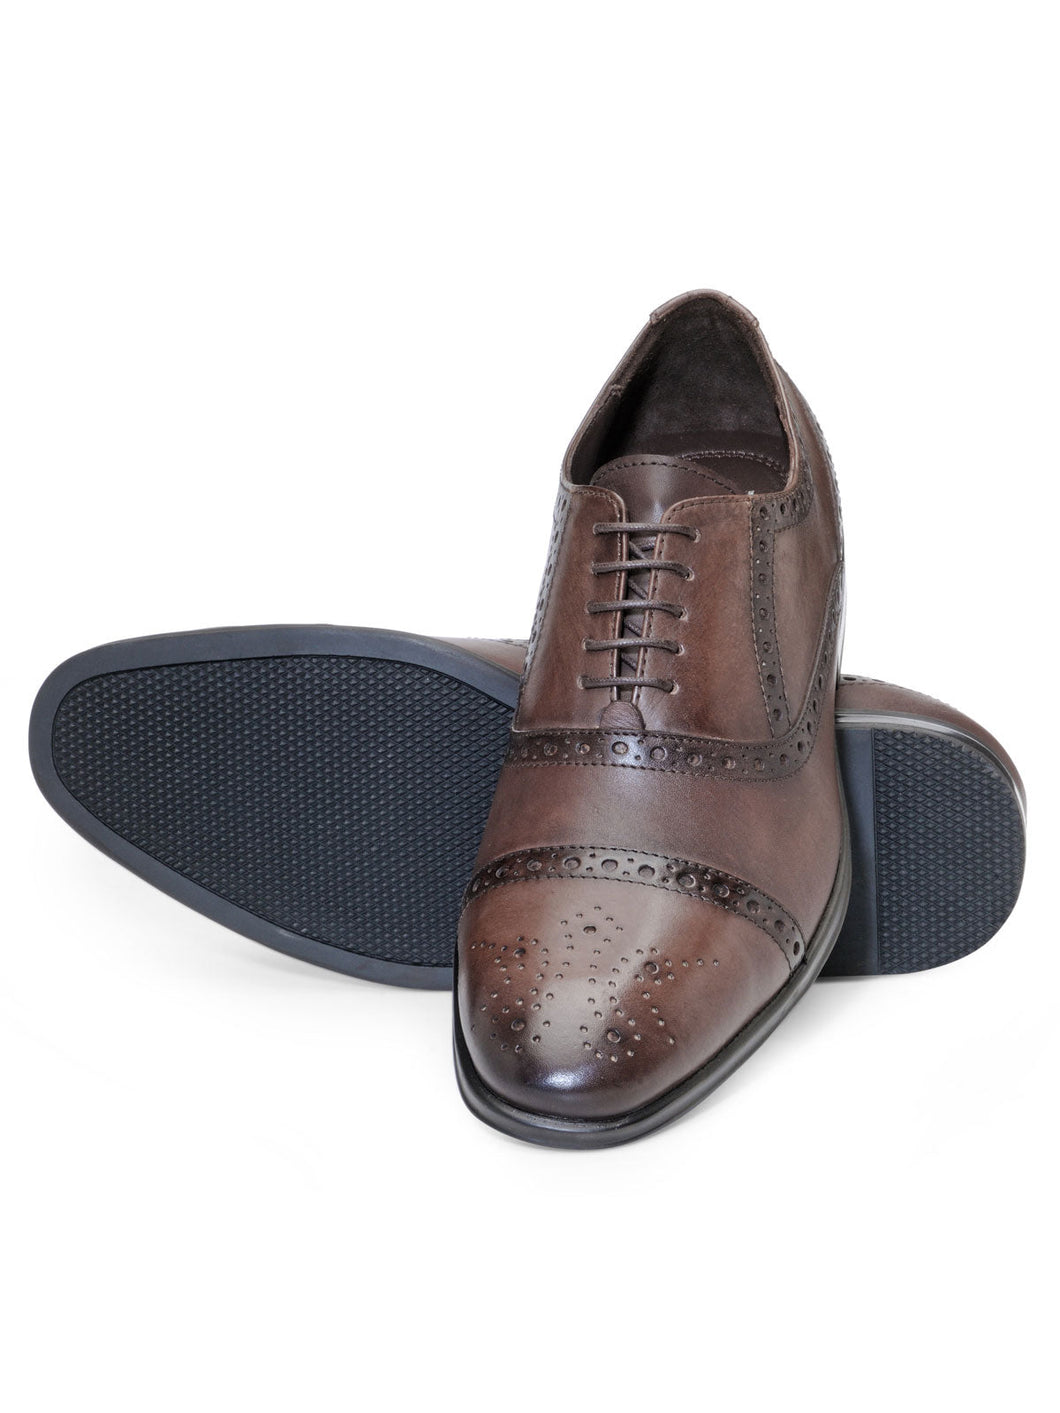 Teakwood Leather Men's Oxford/Brogue Shoes